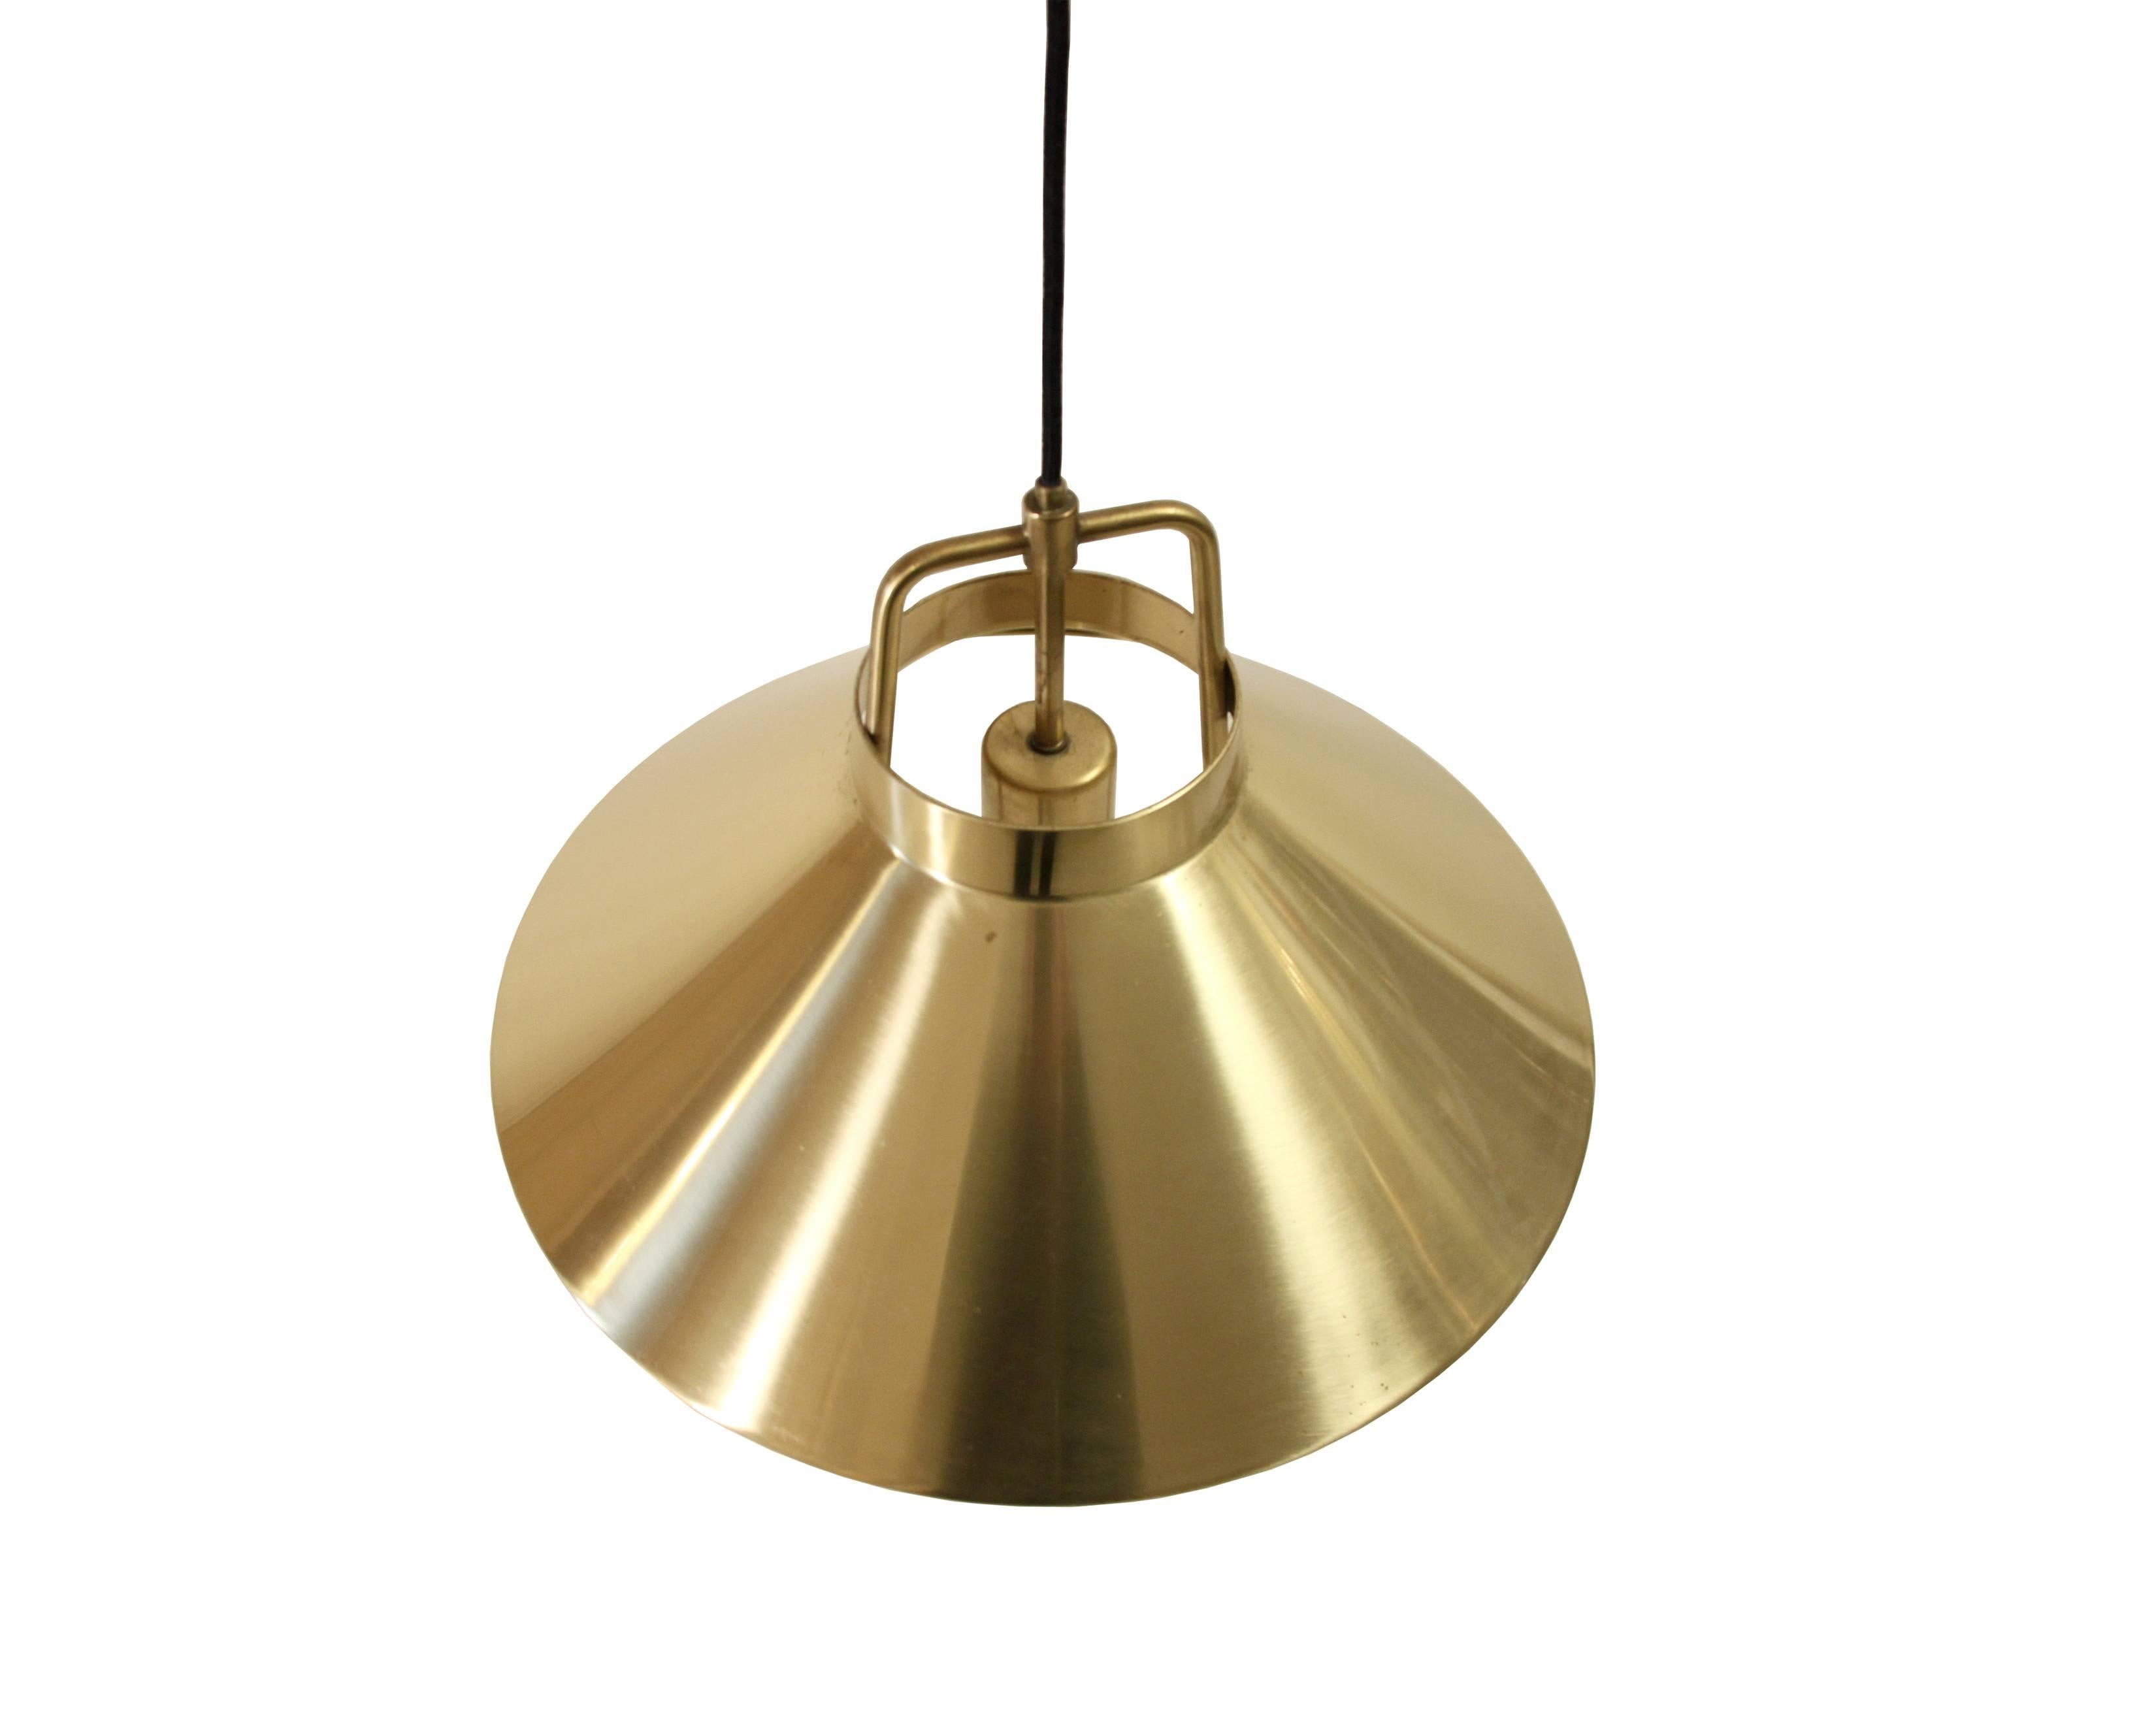 Danish Midcentury Ceiling Light in Brass by Lyfa, 1960s For Sale